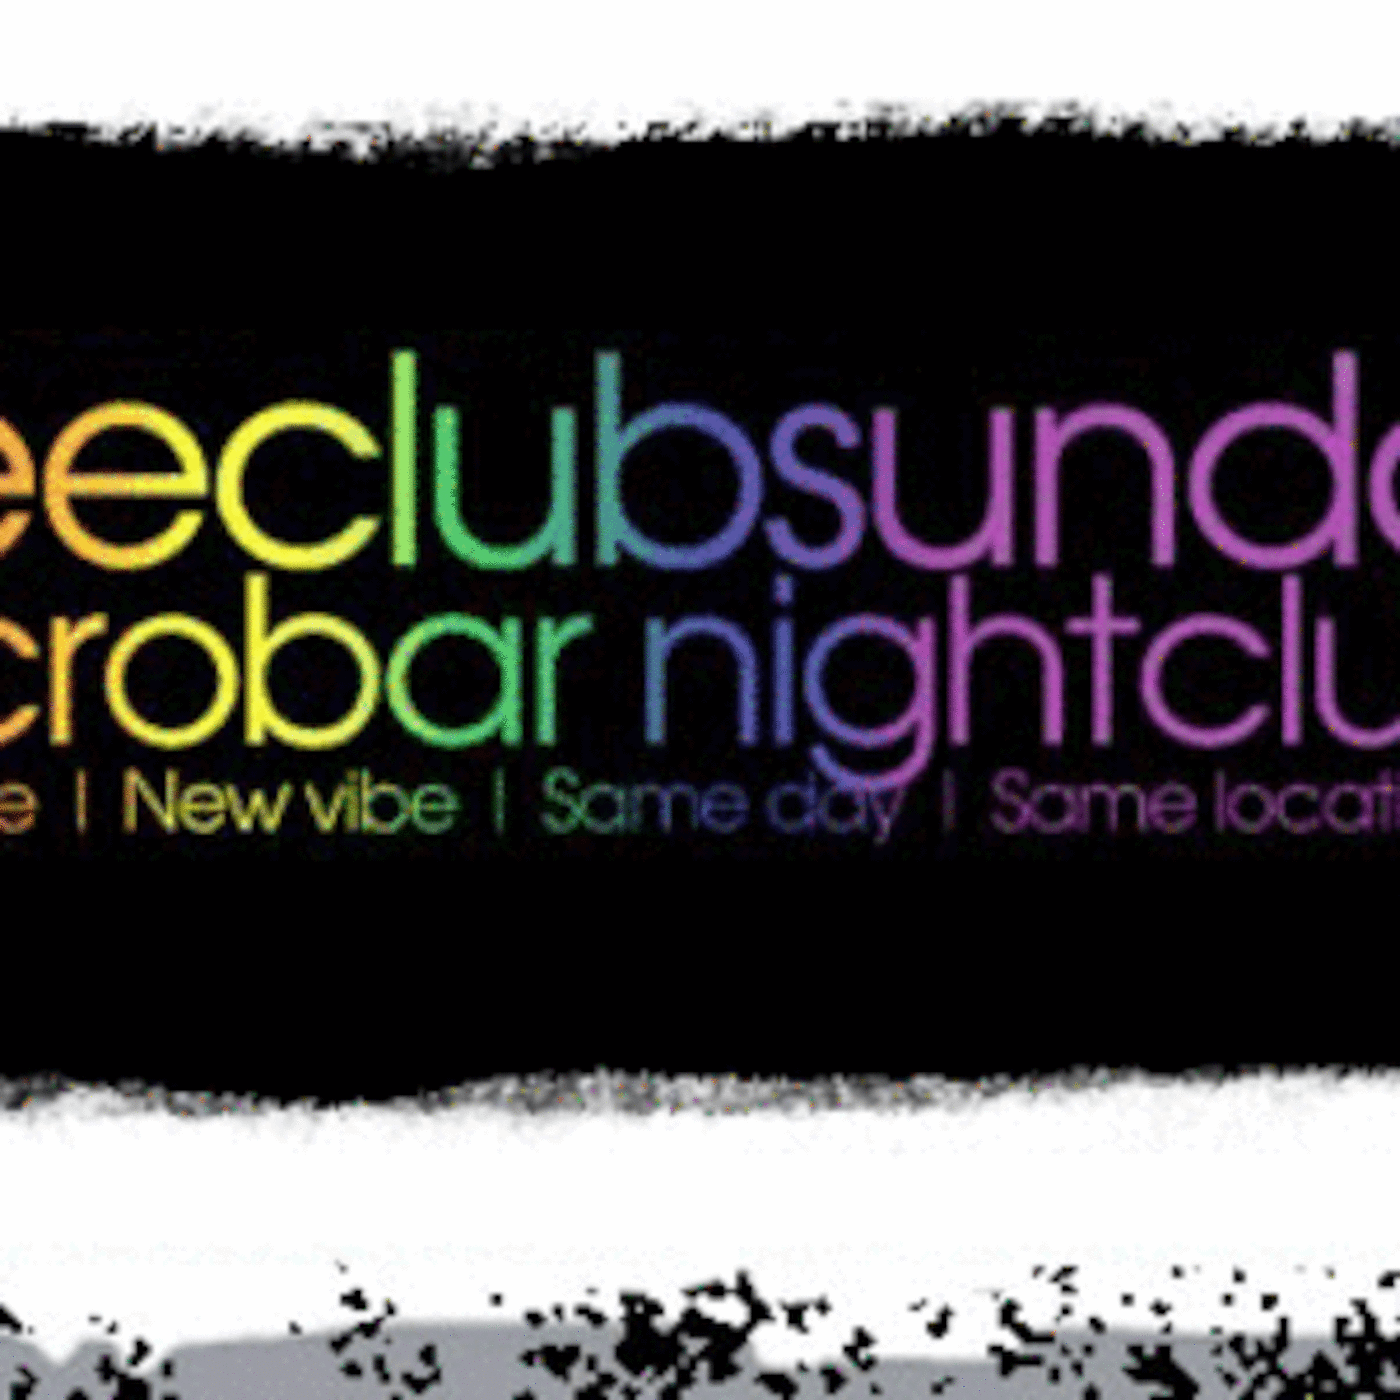 Glee Club Crobar Sundays - 1995 (Episode 2)